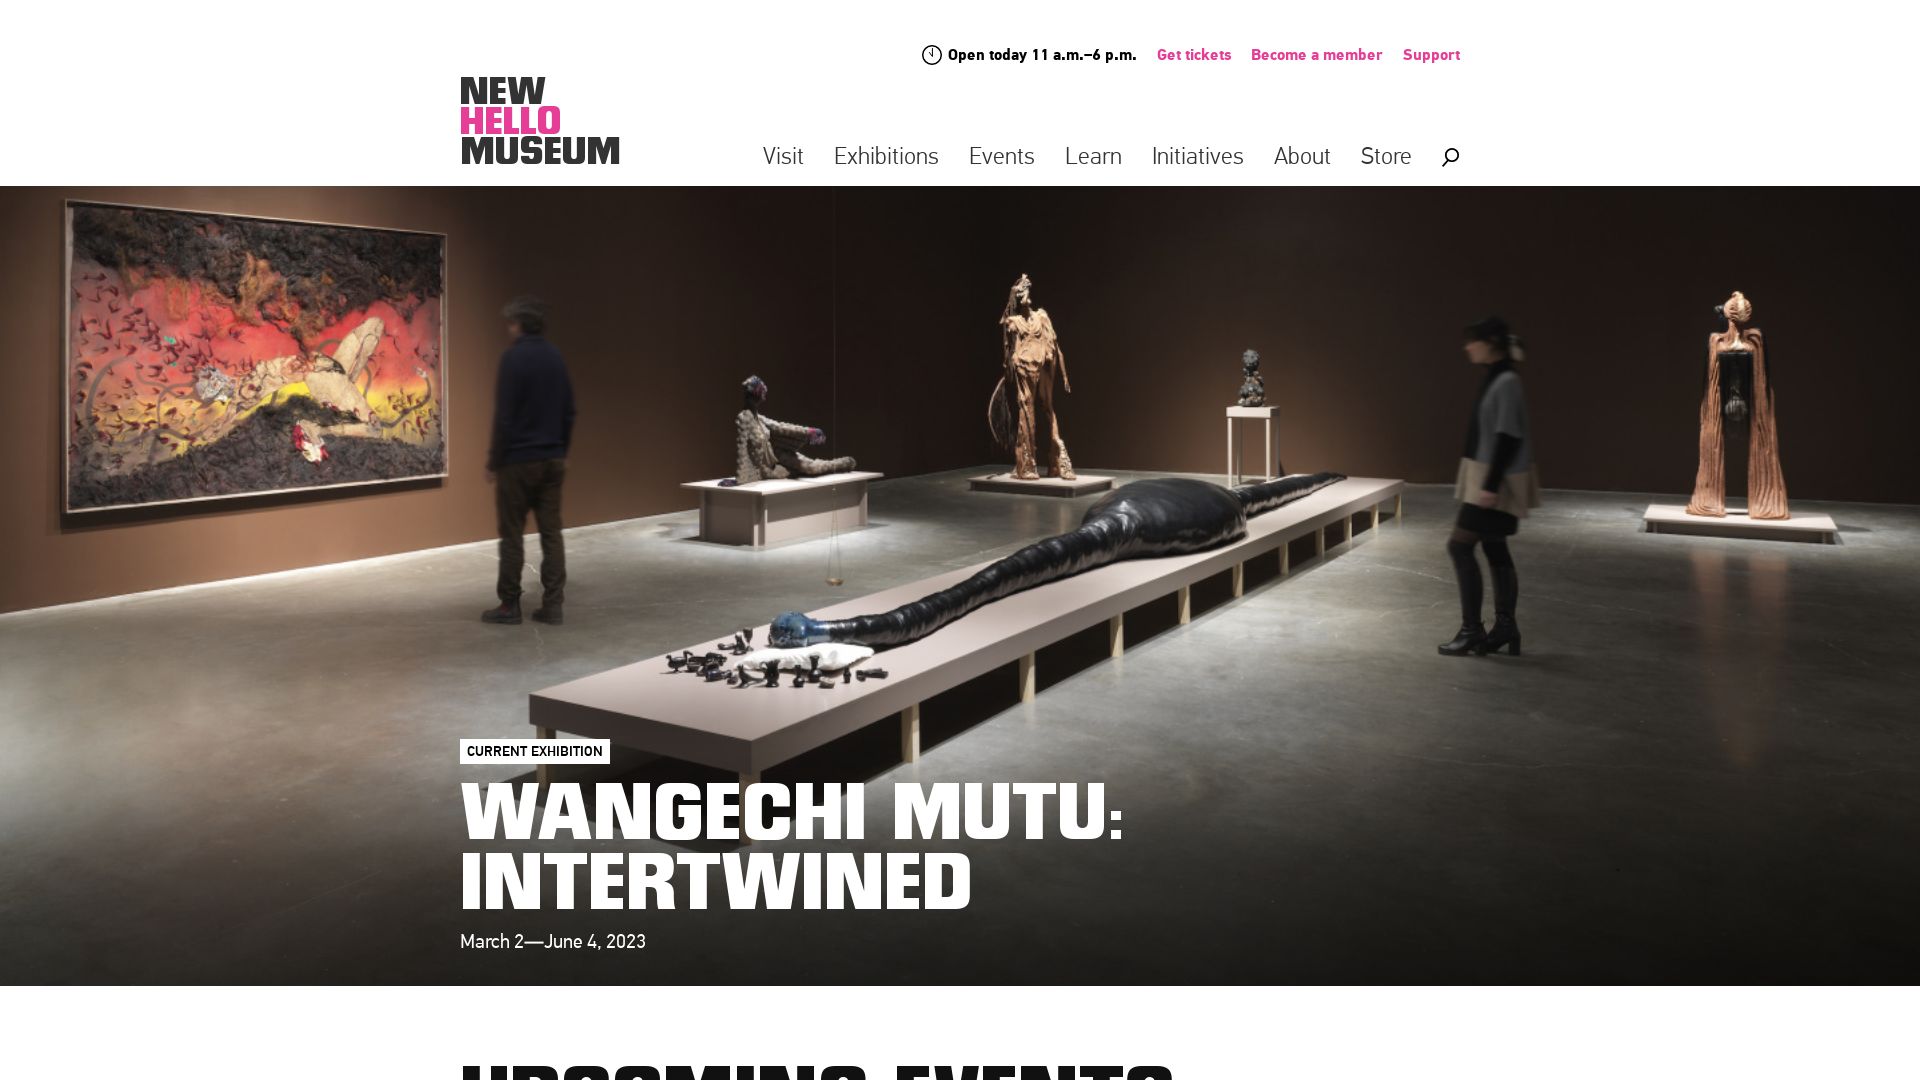 Website status newmuseum.org is   ONLINE